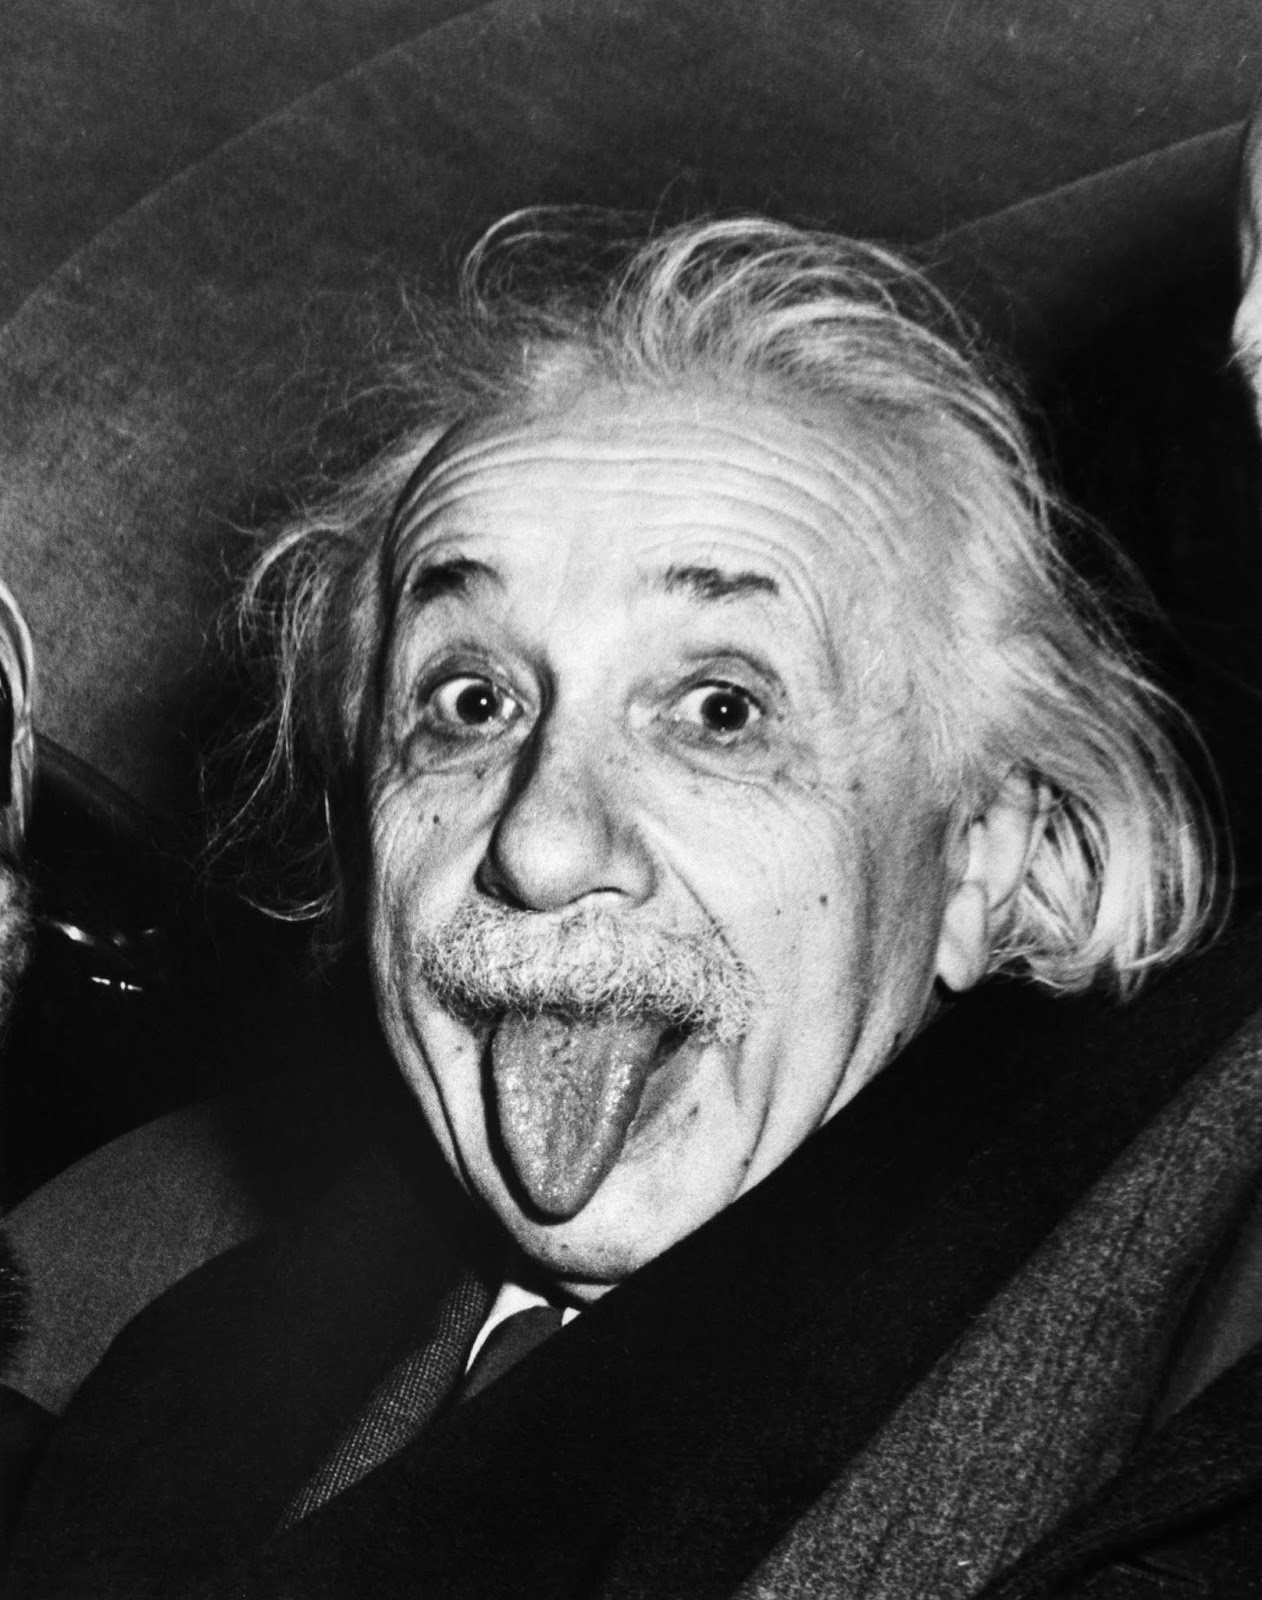 Einstein sticking his tongue out, 1951